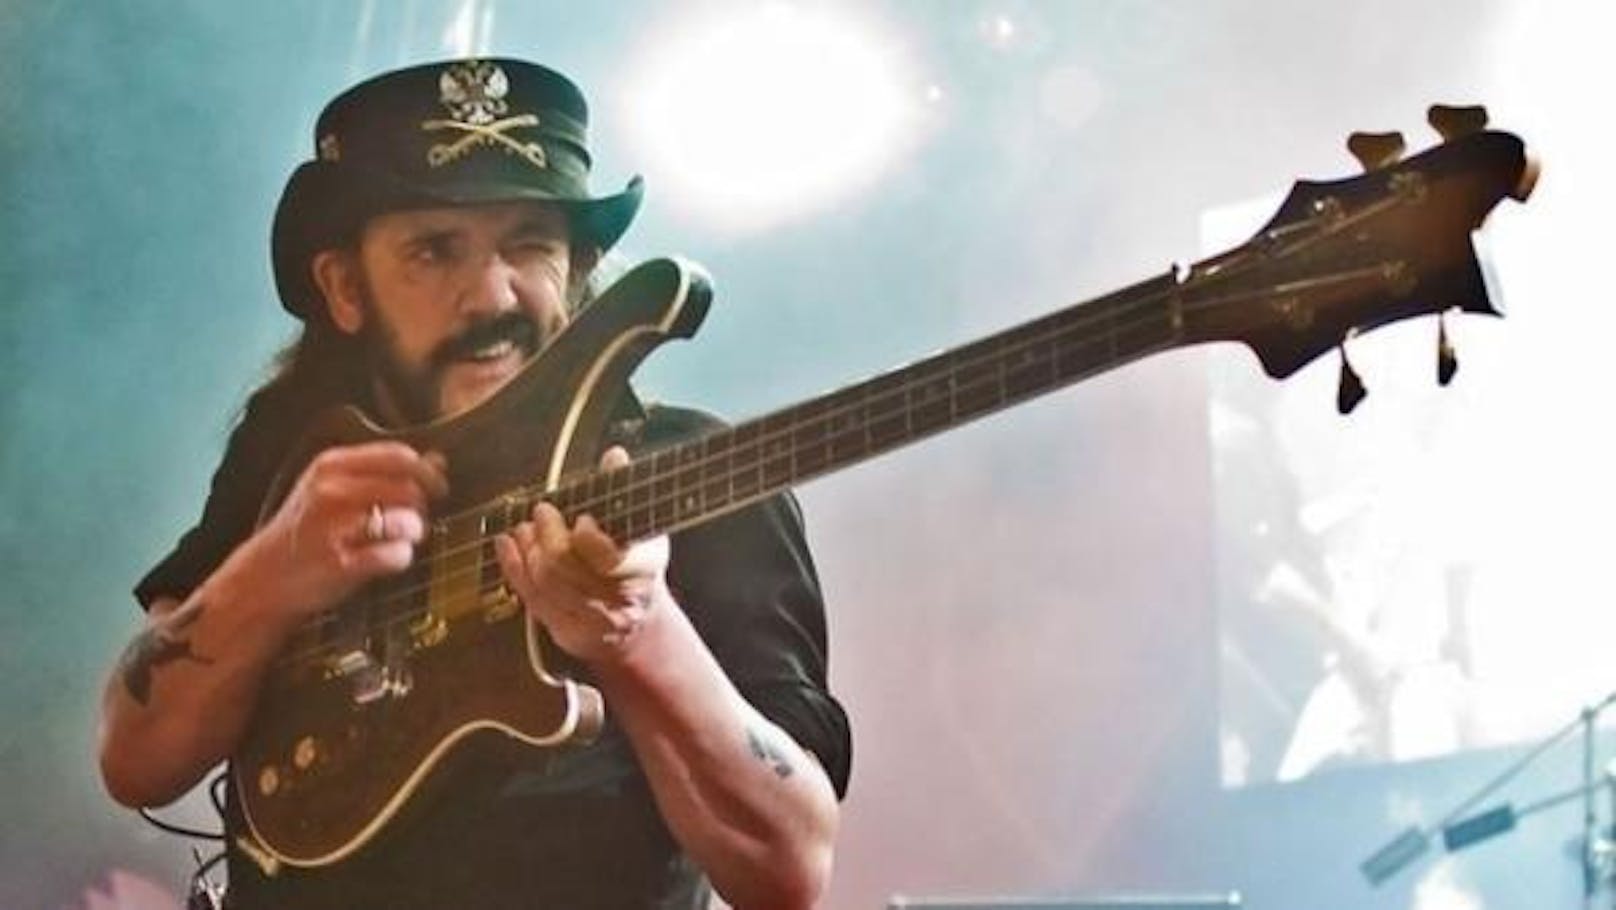 Unvergessene Rock-Ikone: Ian "Lemmy" Kilmister starb 2015 an Krebs. Jetzt erscheint ein Videogame, das dem legendären Motörhead-Boss alle Ehre macht.